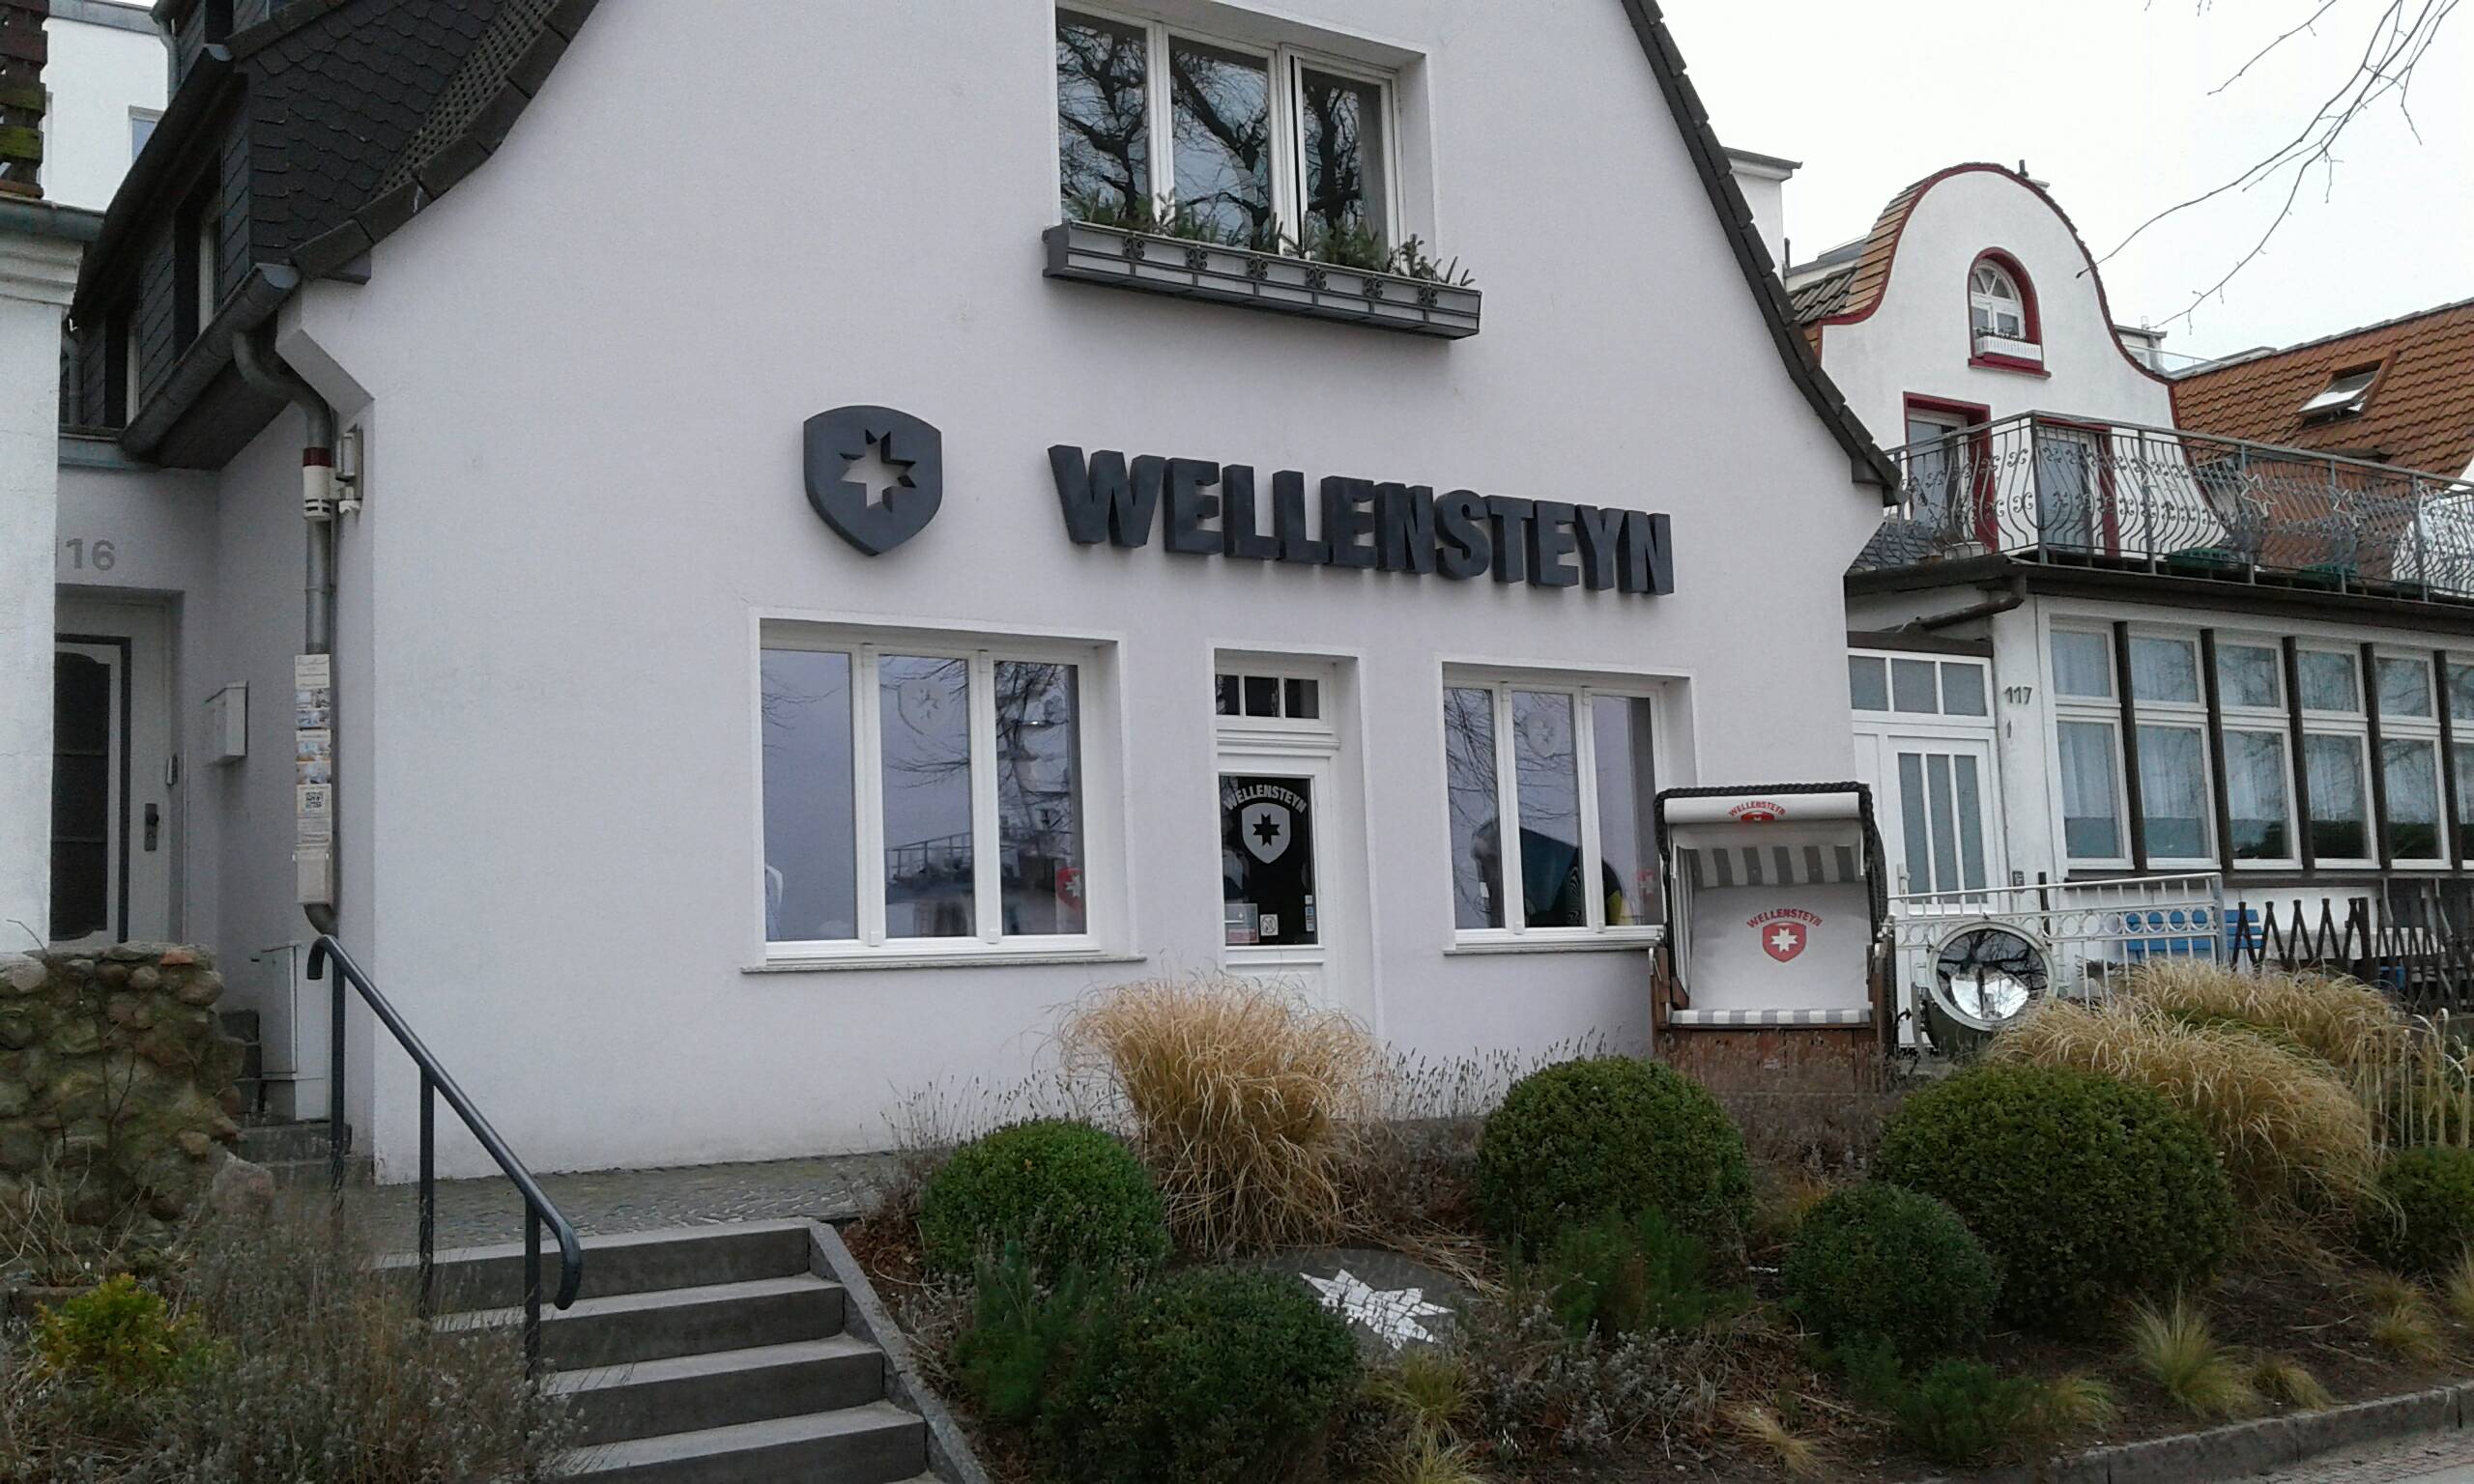 Bild 1 Wellensteyn-Store Rostock-Warnemünde in Rostock